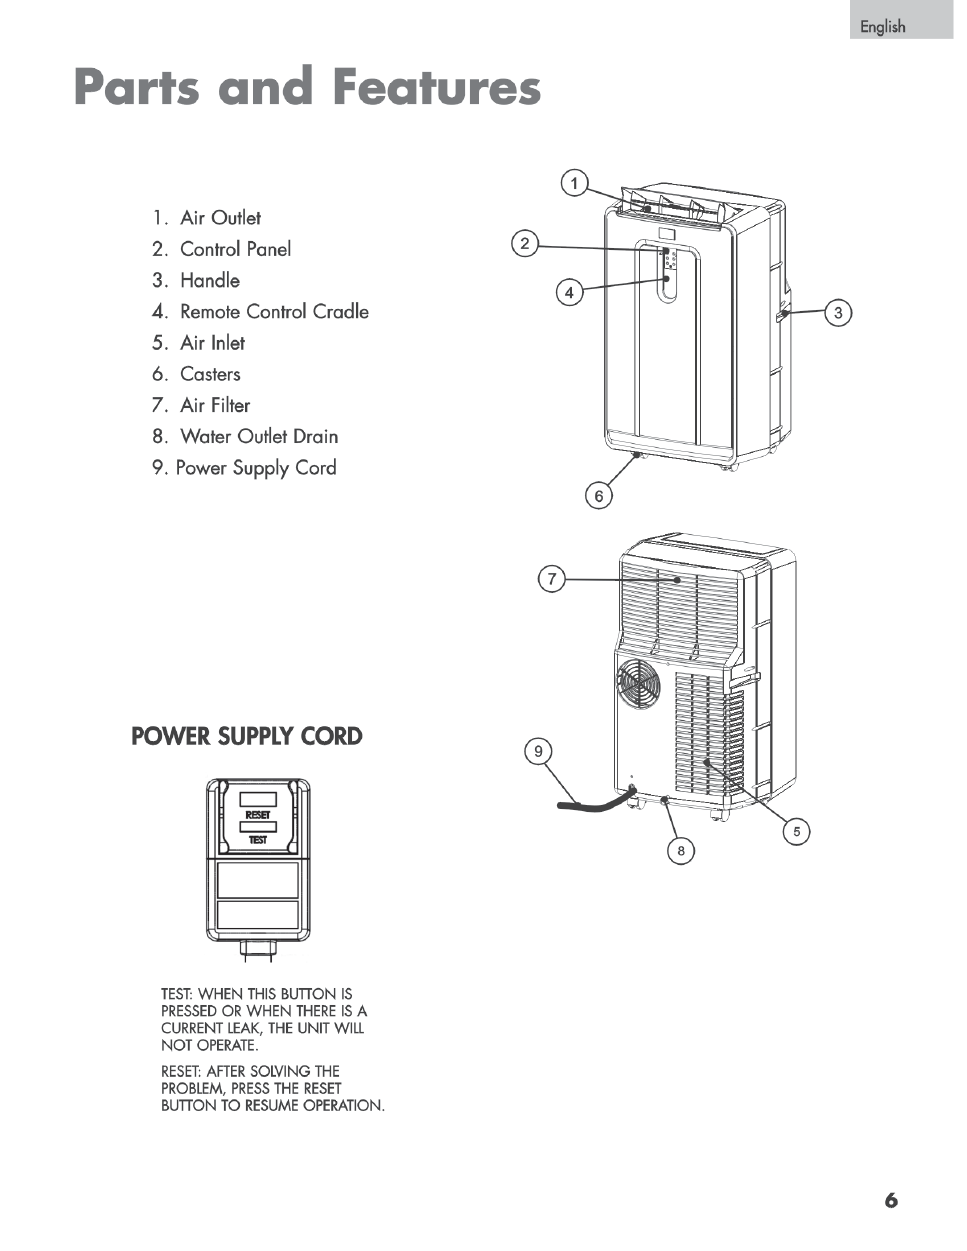 Small portable air conditioner